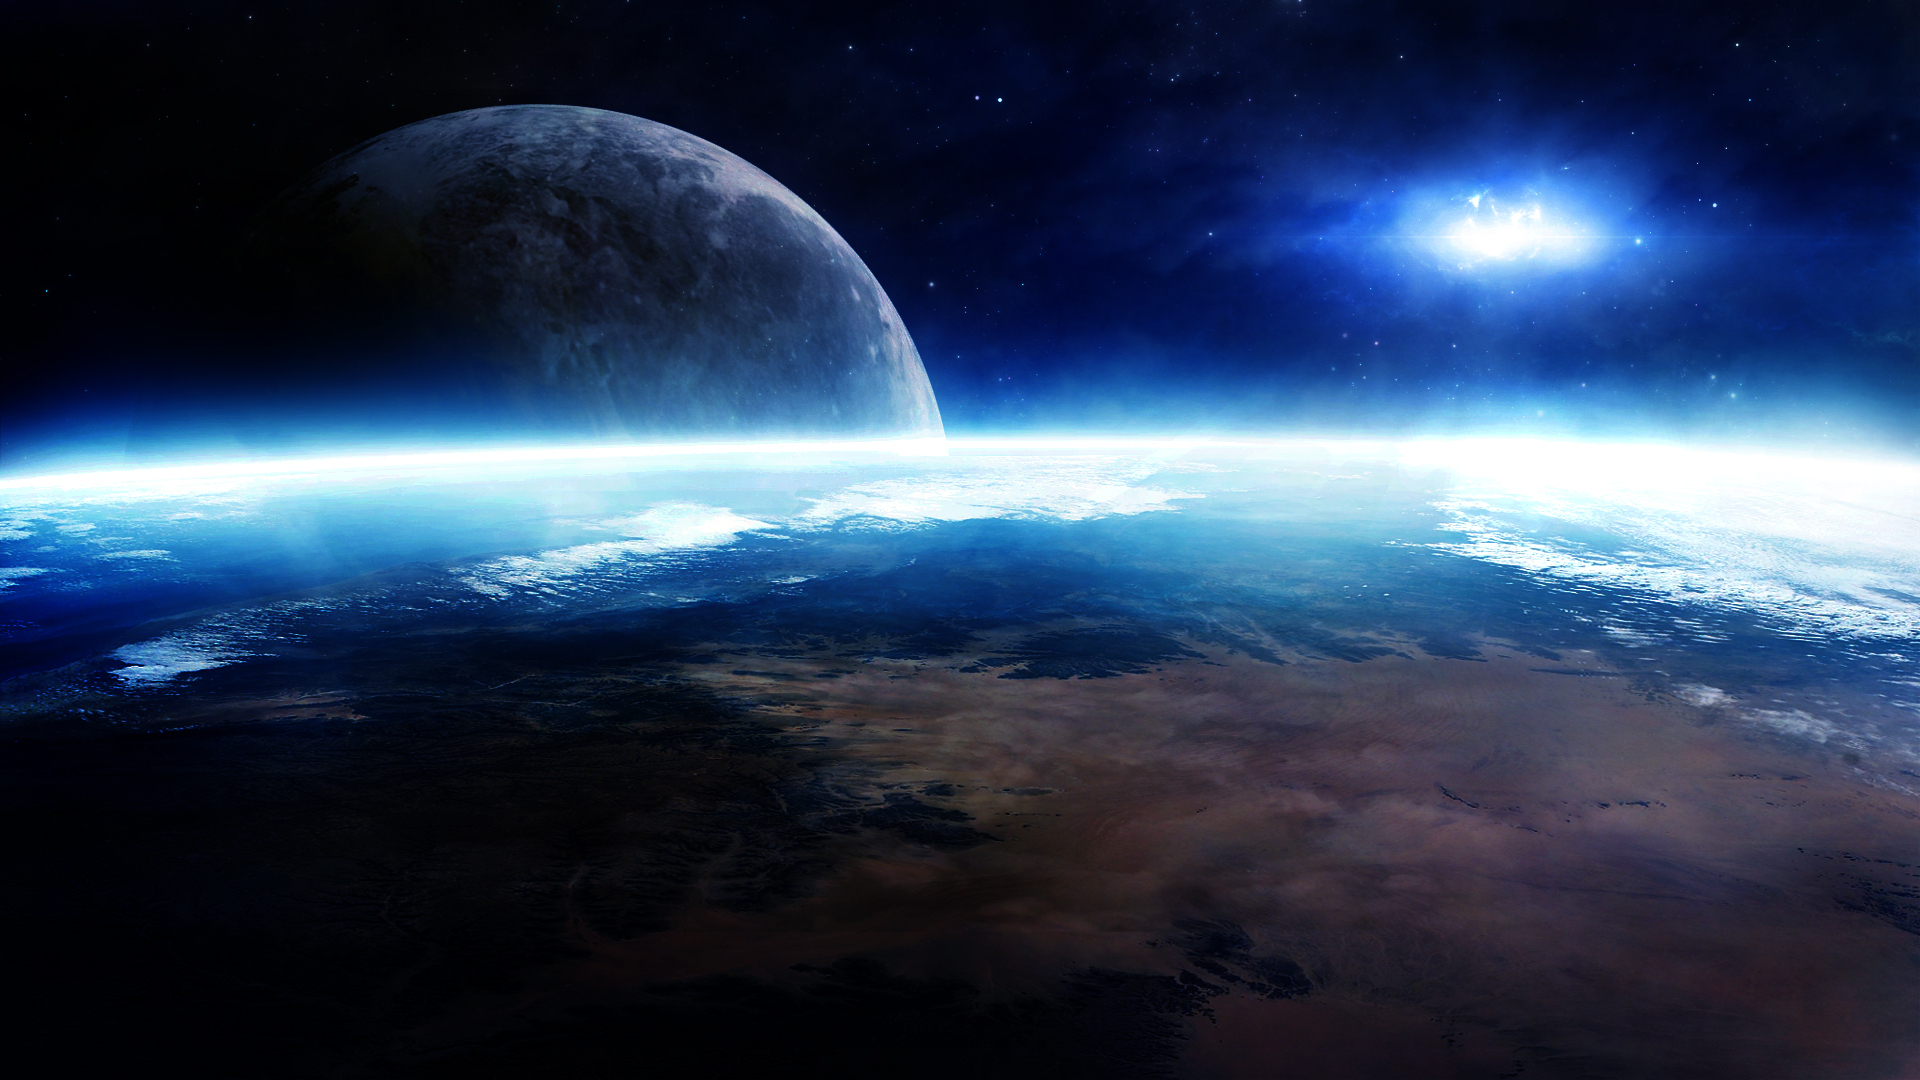 Descarga gratuita de fondo de pantalla para móvil de Ciencia Ficción, Planetscape.